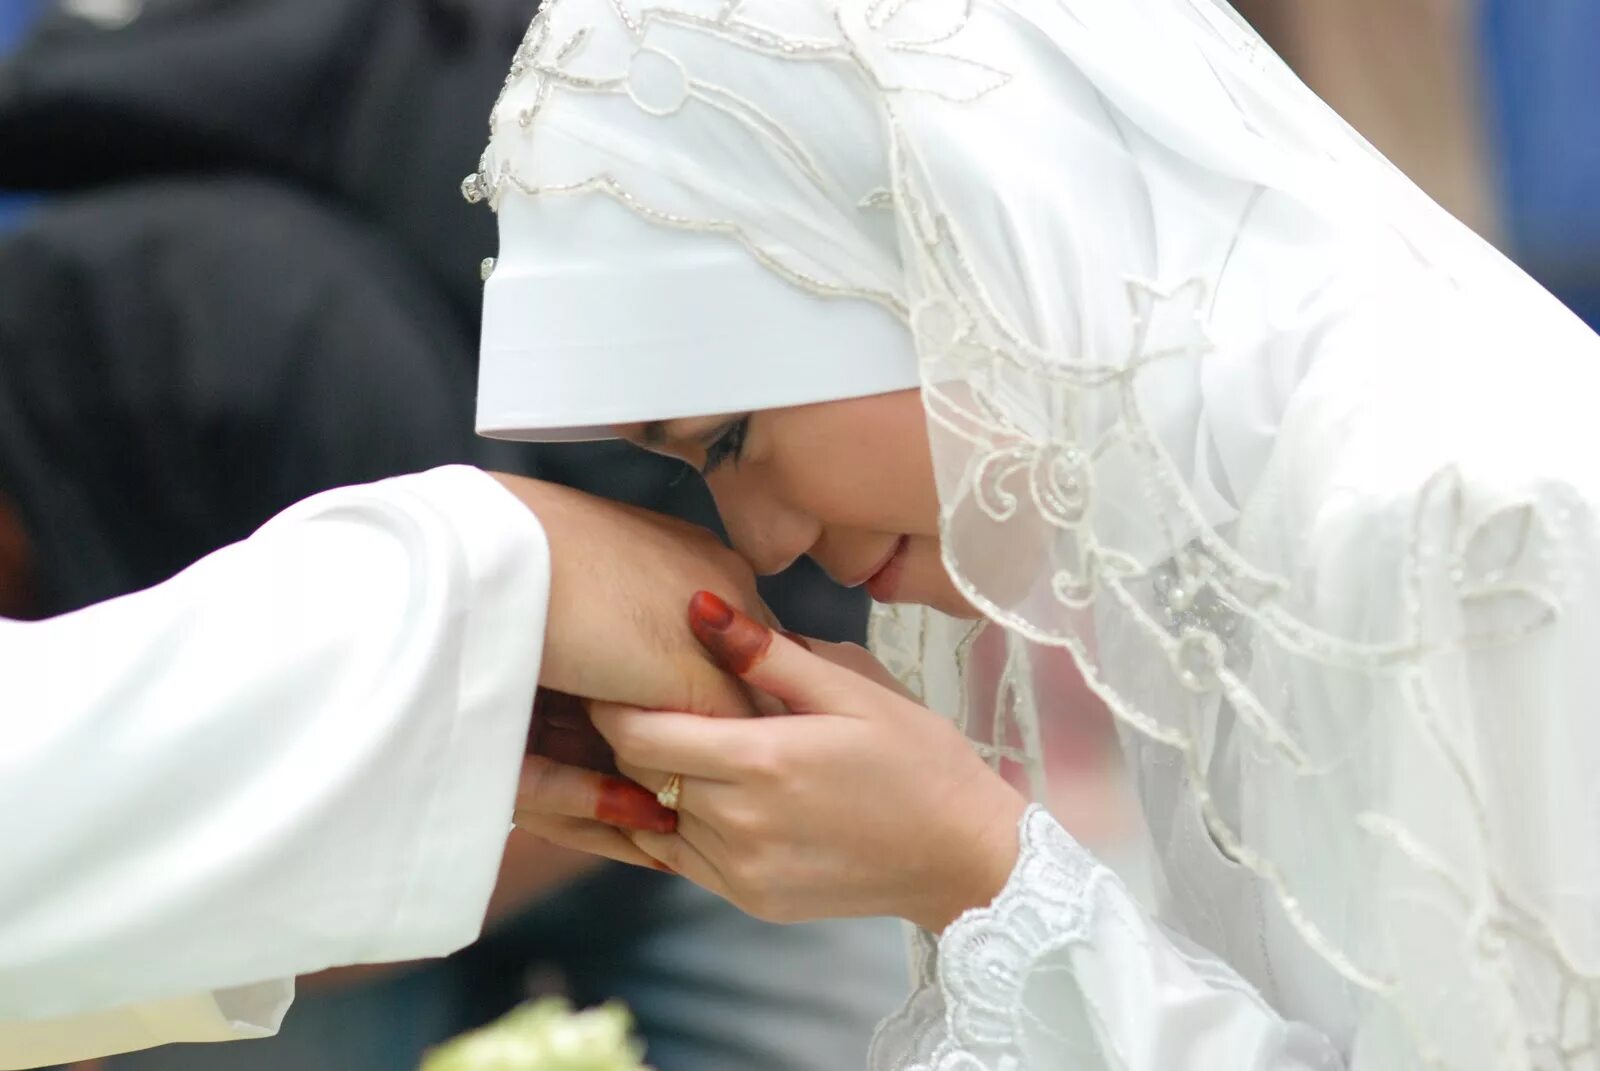 Мусульмане можно интимном. Покорная мусульманка. Узбекская невеста. Мусульманка с мужем. Покорная мусульманская жена.